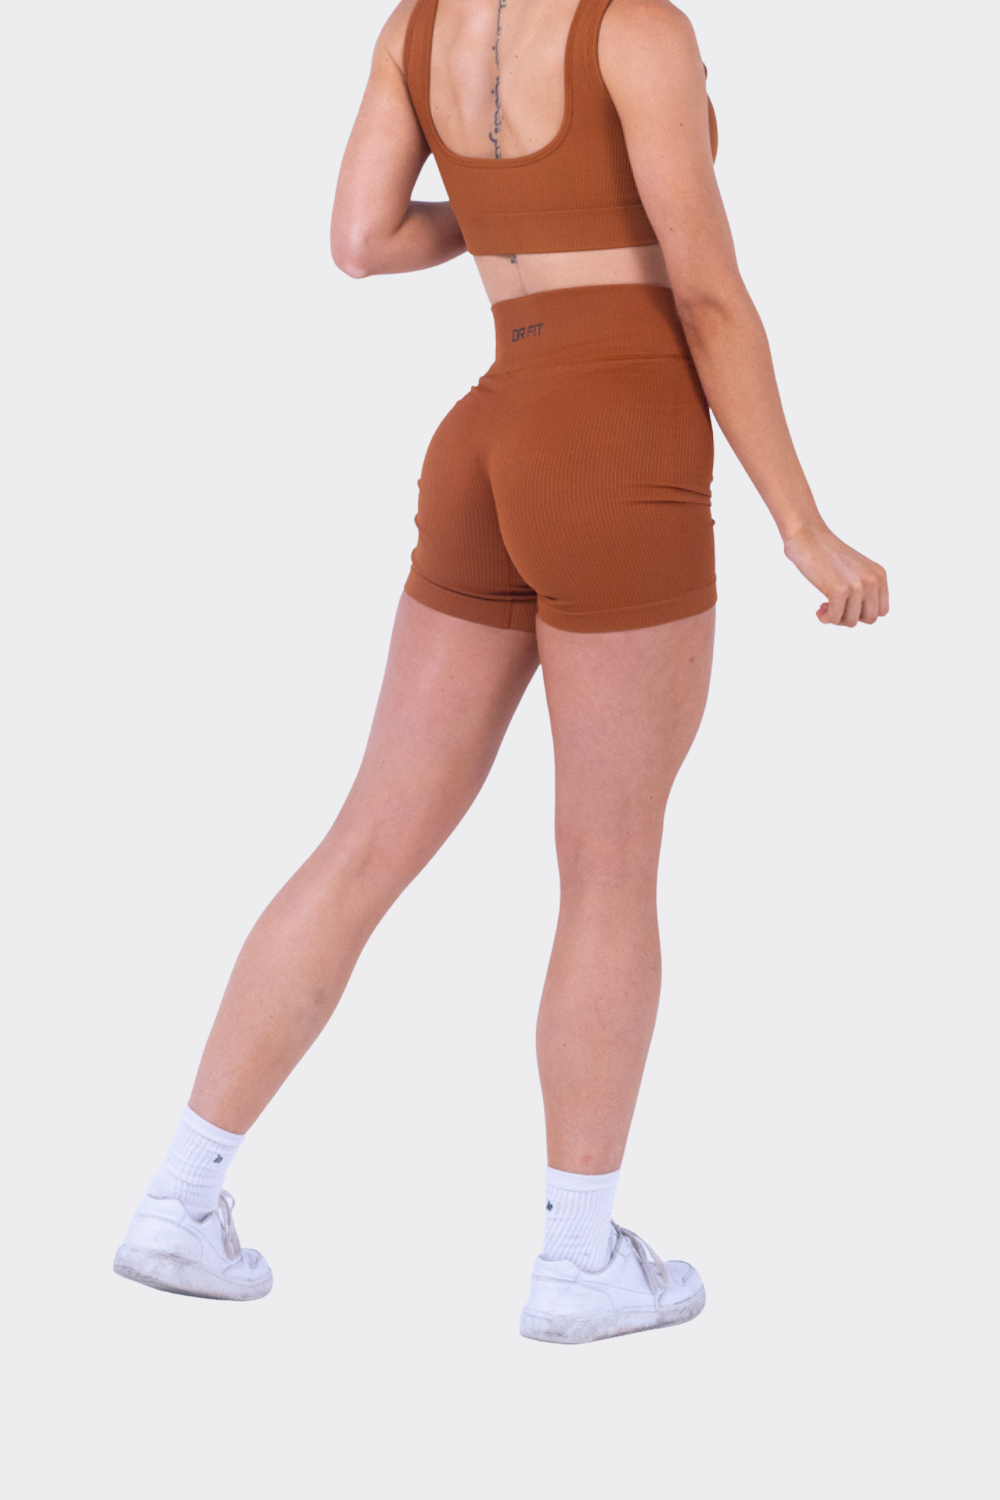 Vintage Tan Shorts